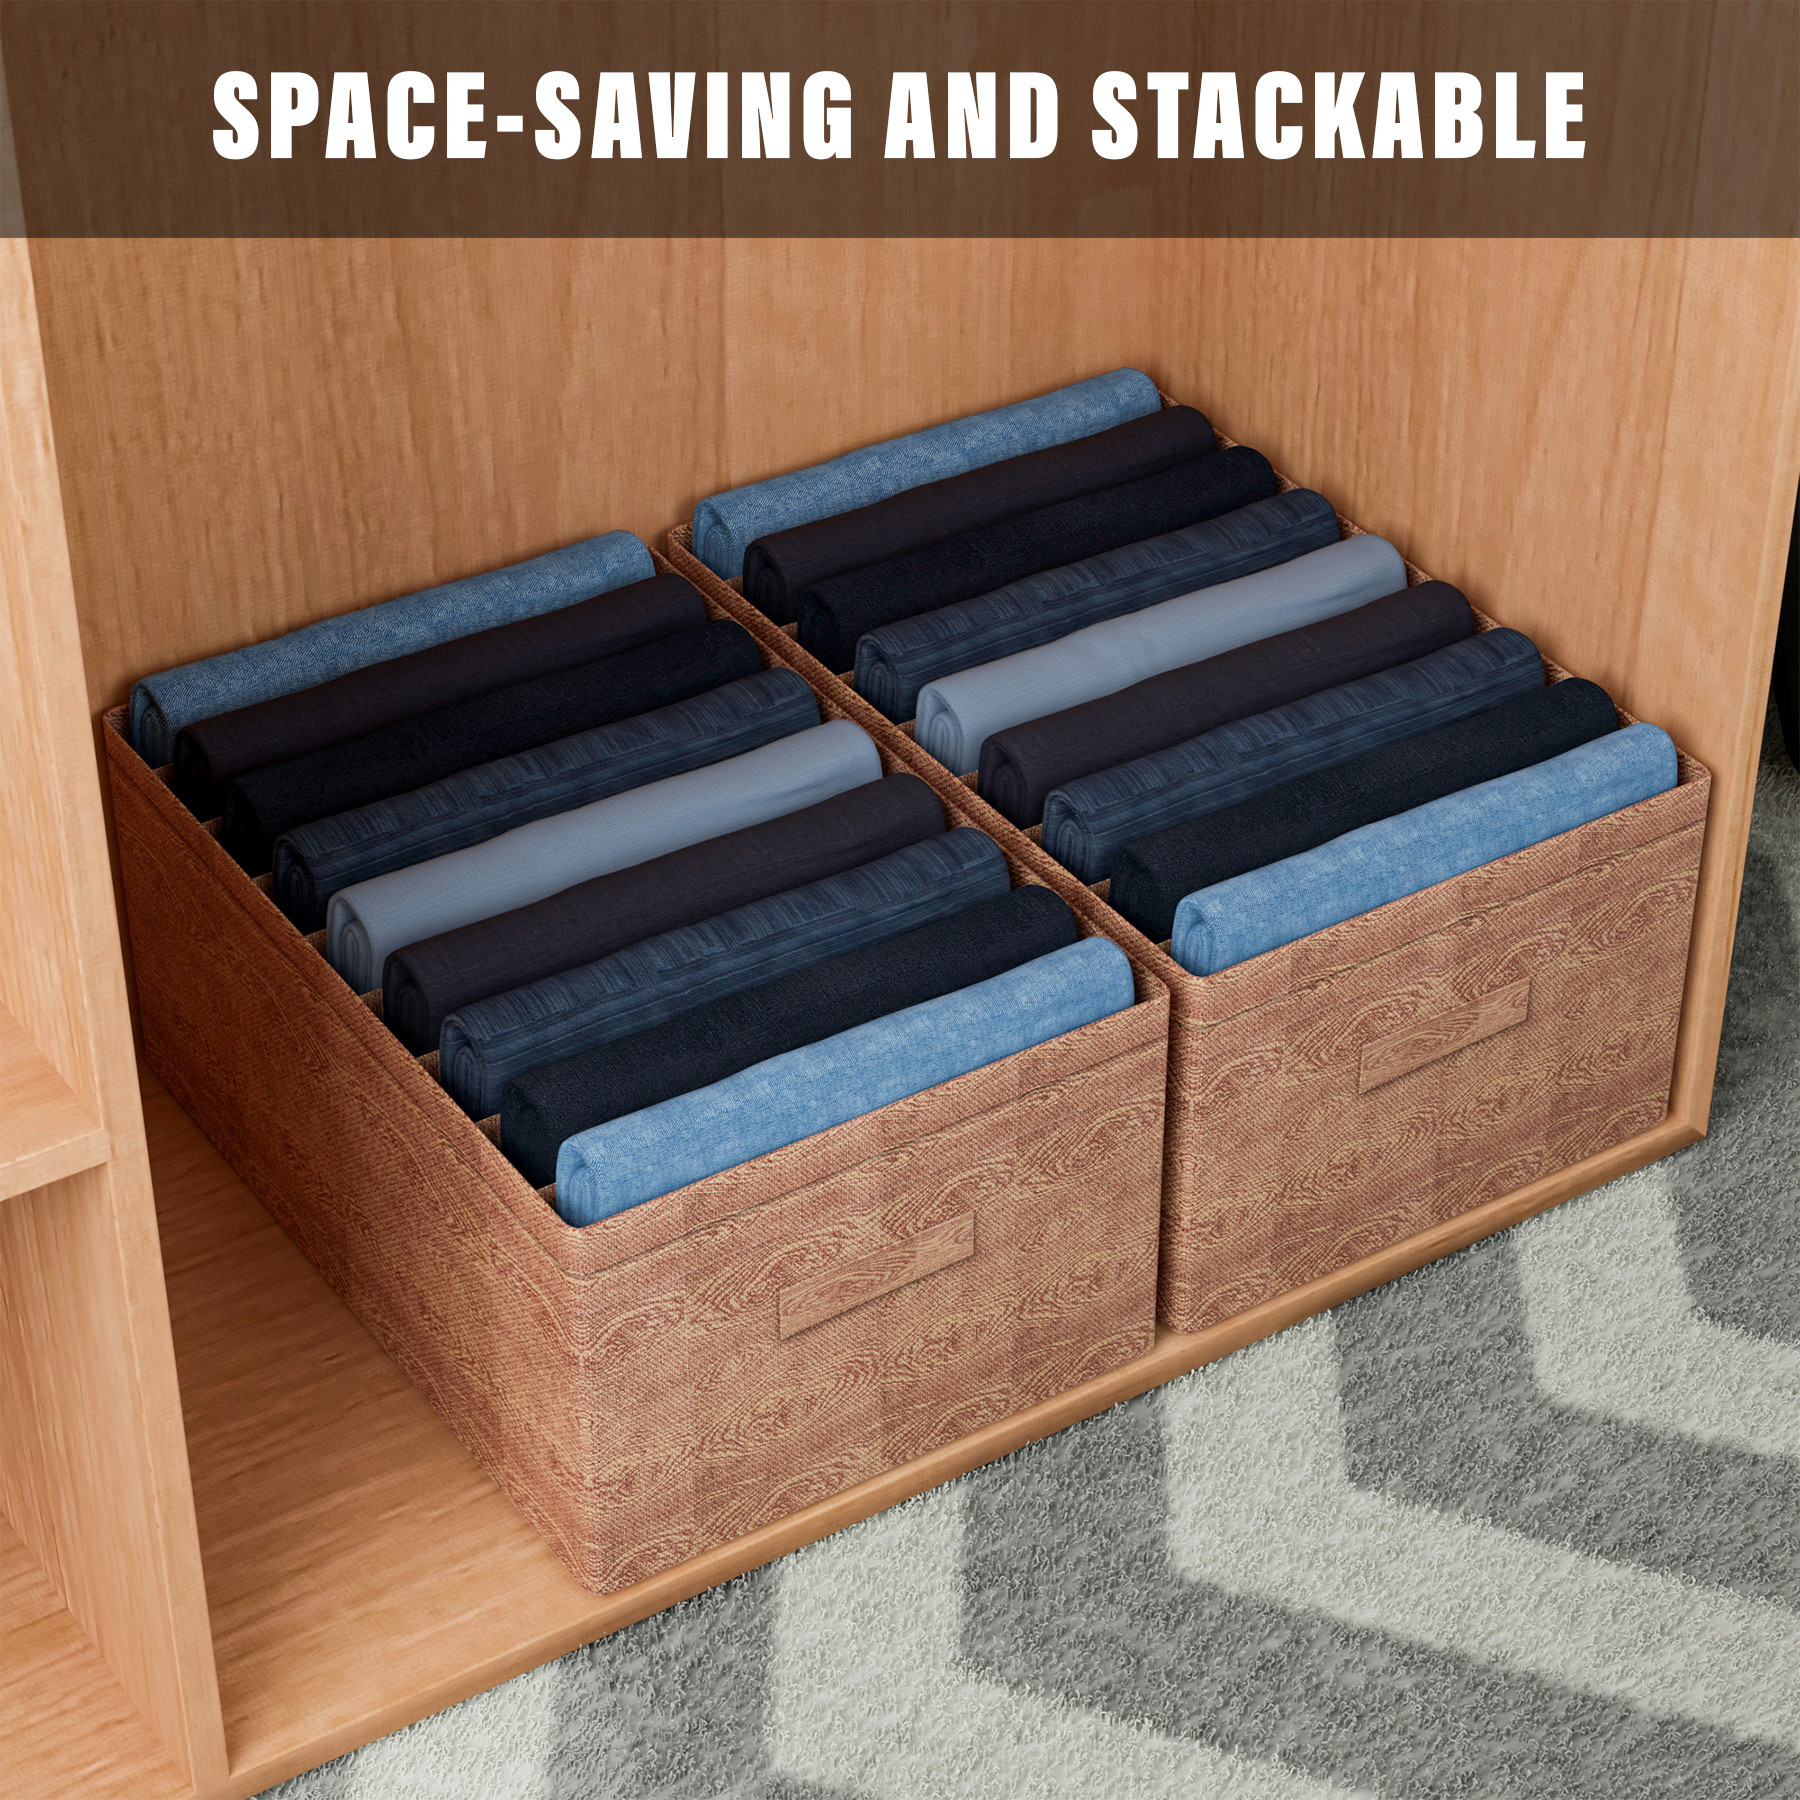 Kuber Industries Trouser Box | Wardrobe Organizer | Clothes Organizer | Storage Box for Pants-Shirt-Sweaters-Bra Panty-Socks | 9-Grid Closet Organizer | Large | Wooden